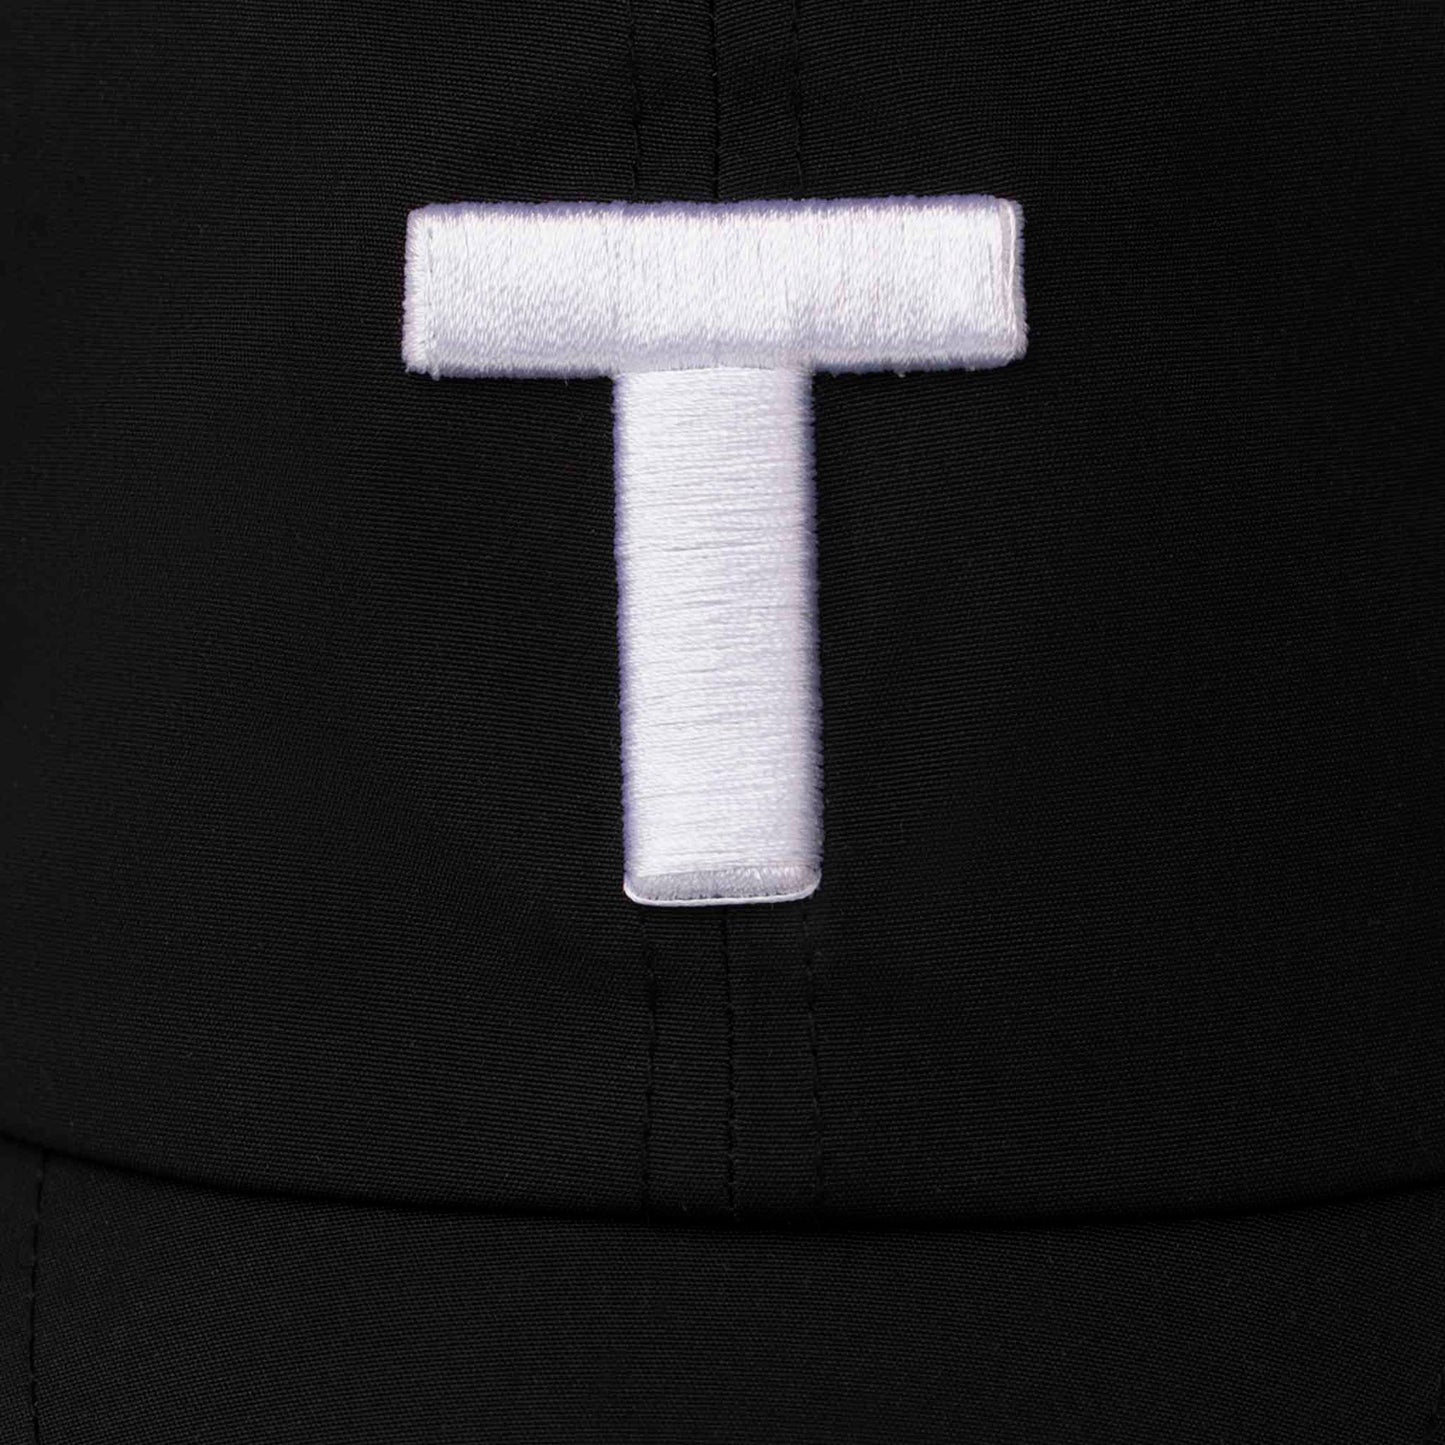 T Logo Golf Cap - Black